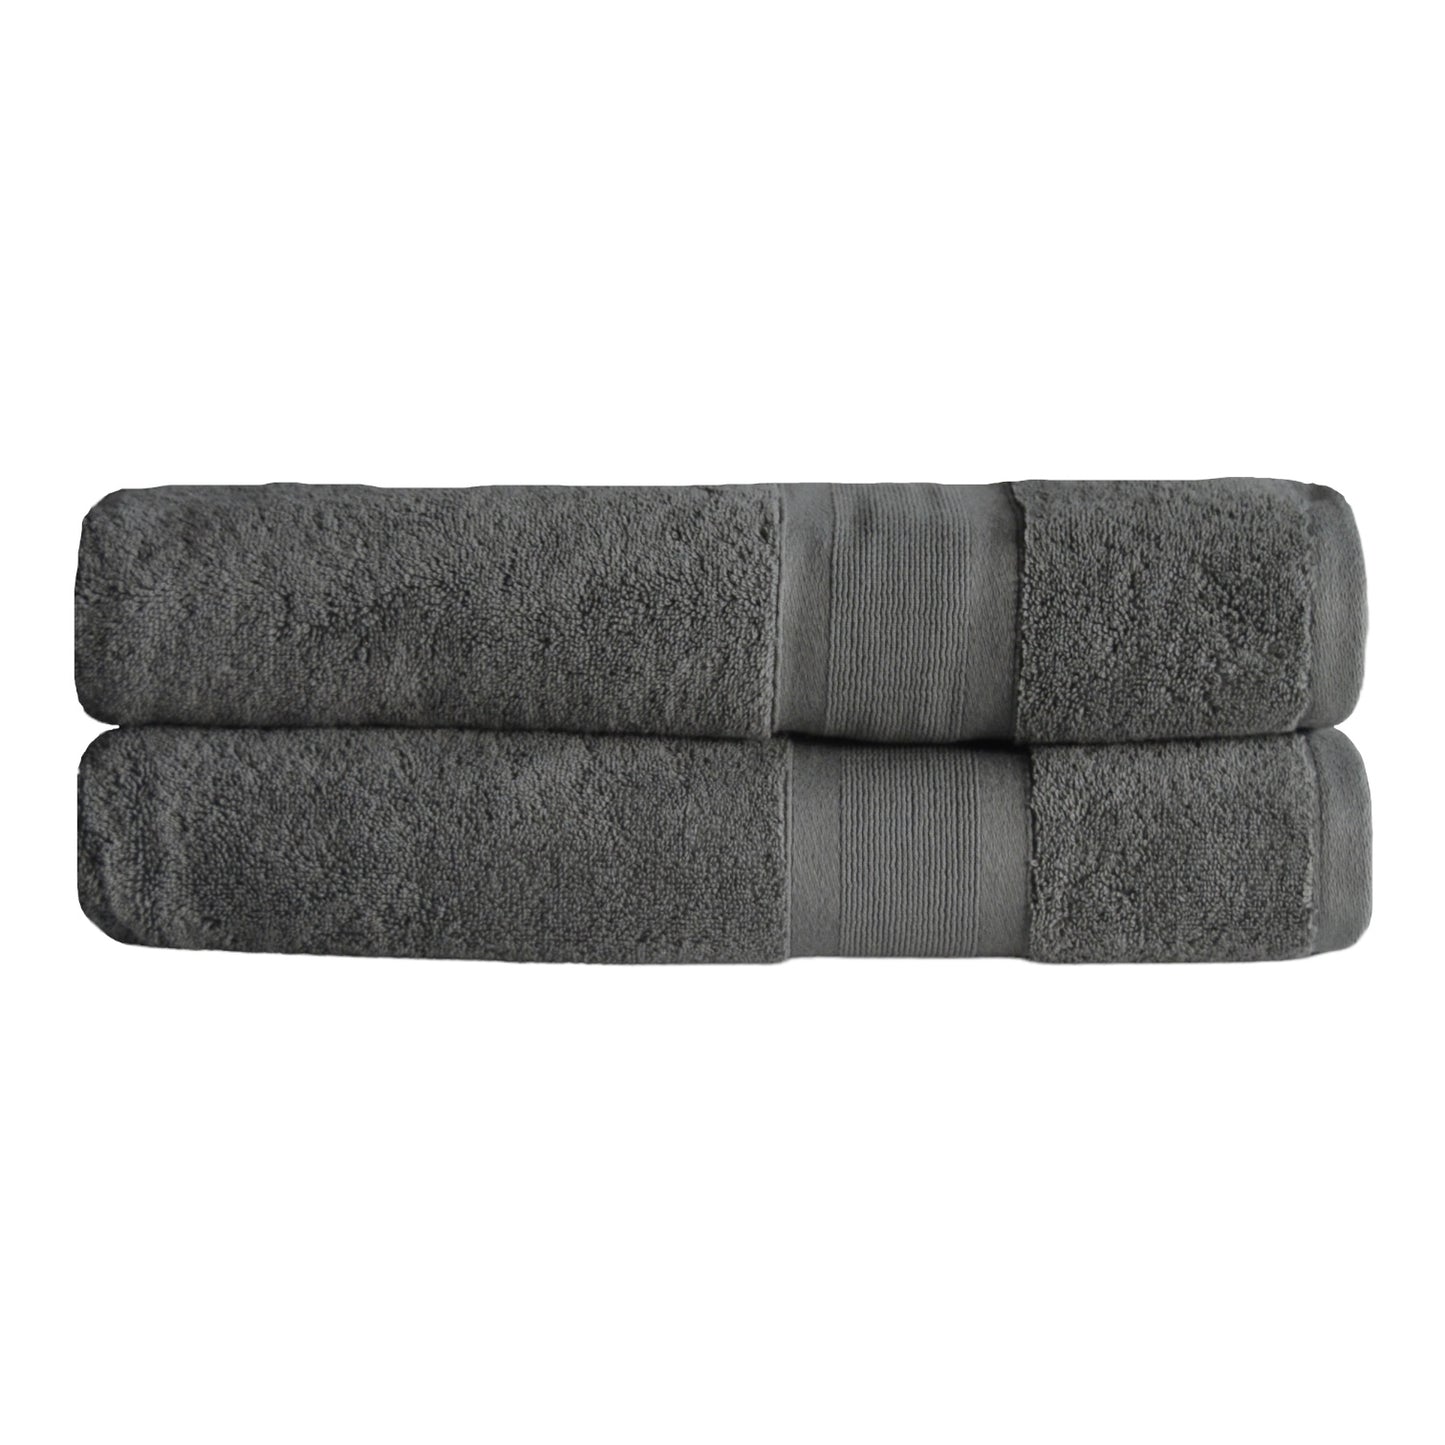 Combed Turkish Cotton Towel Set in Grey color